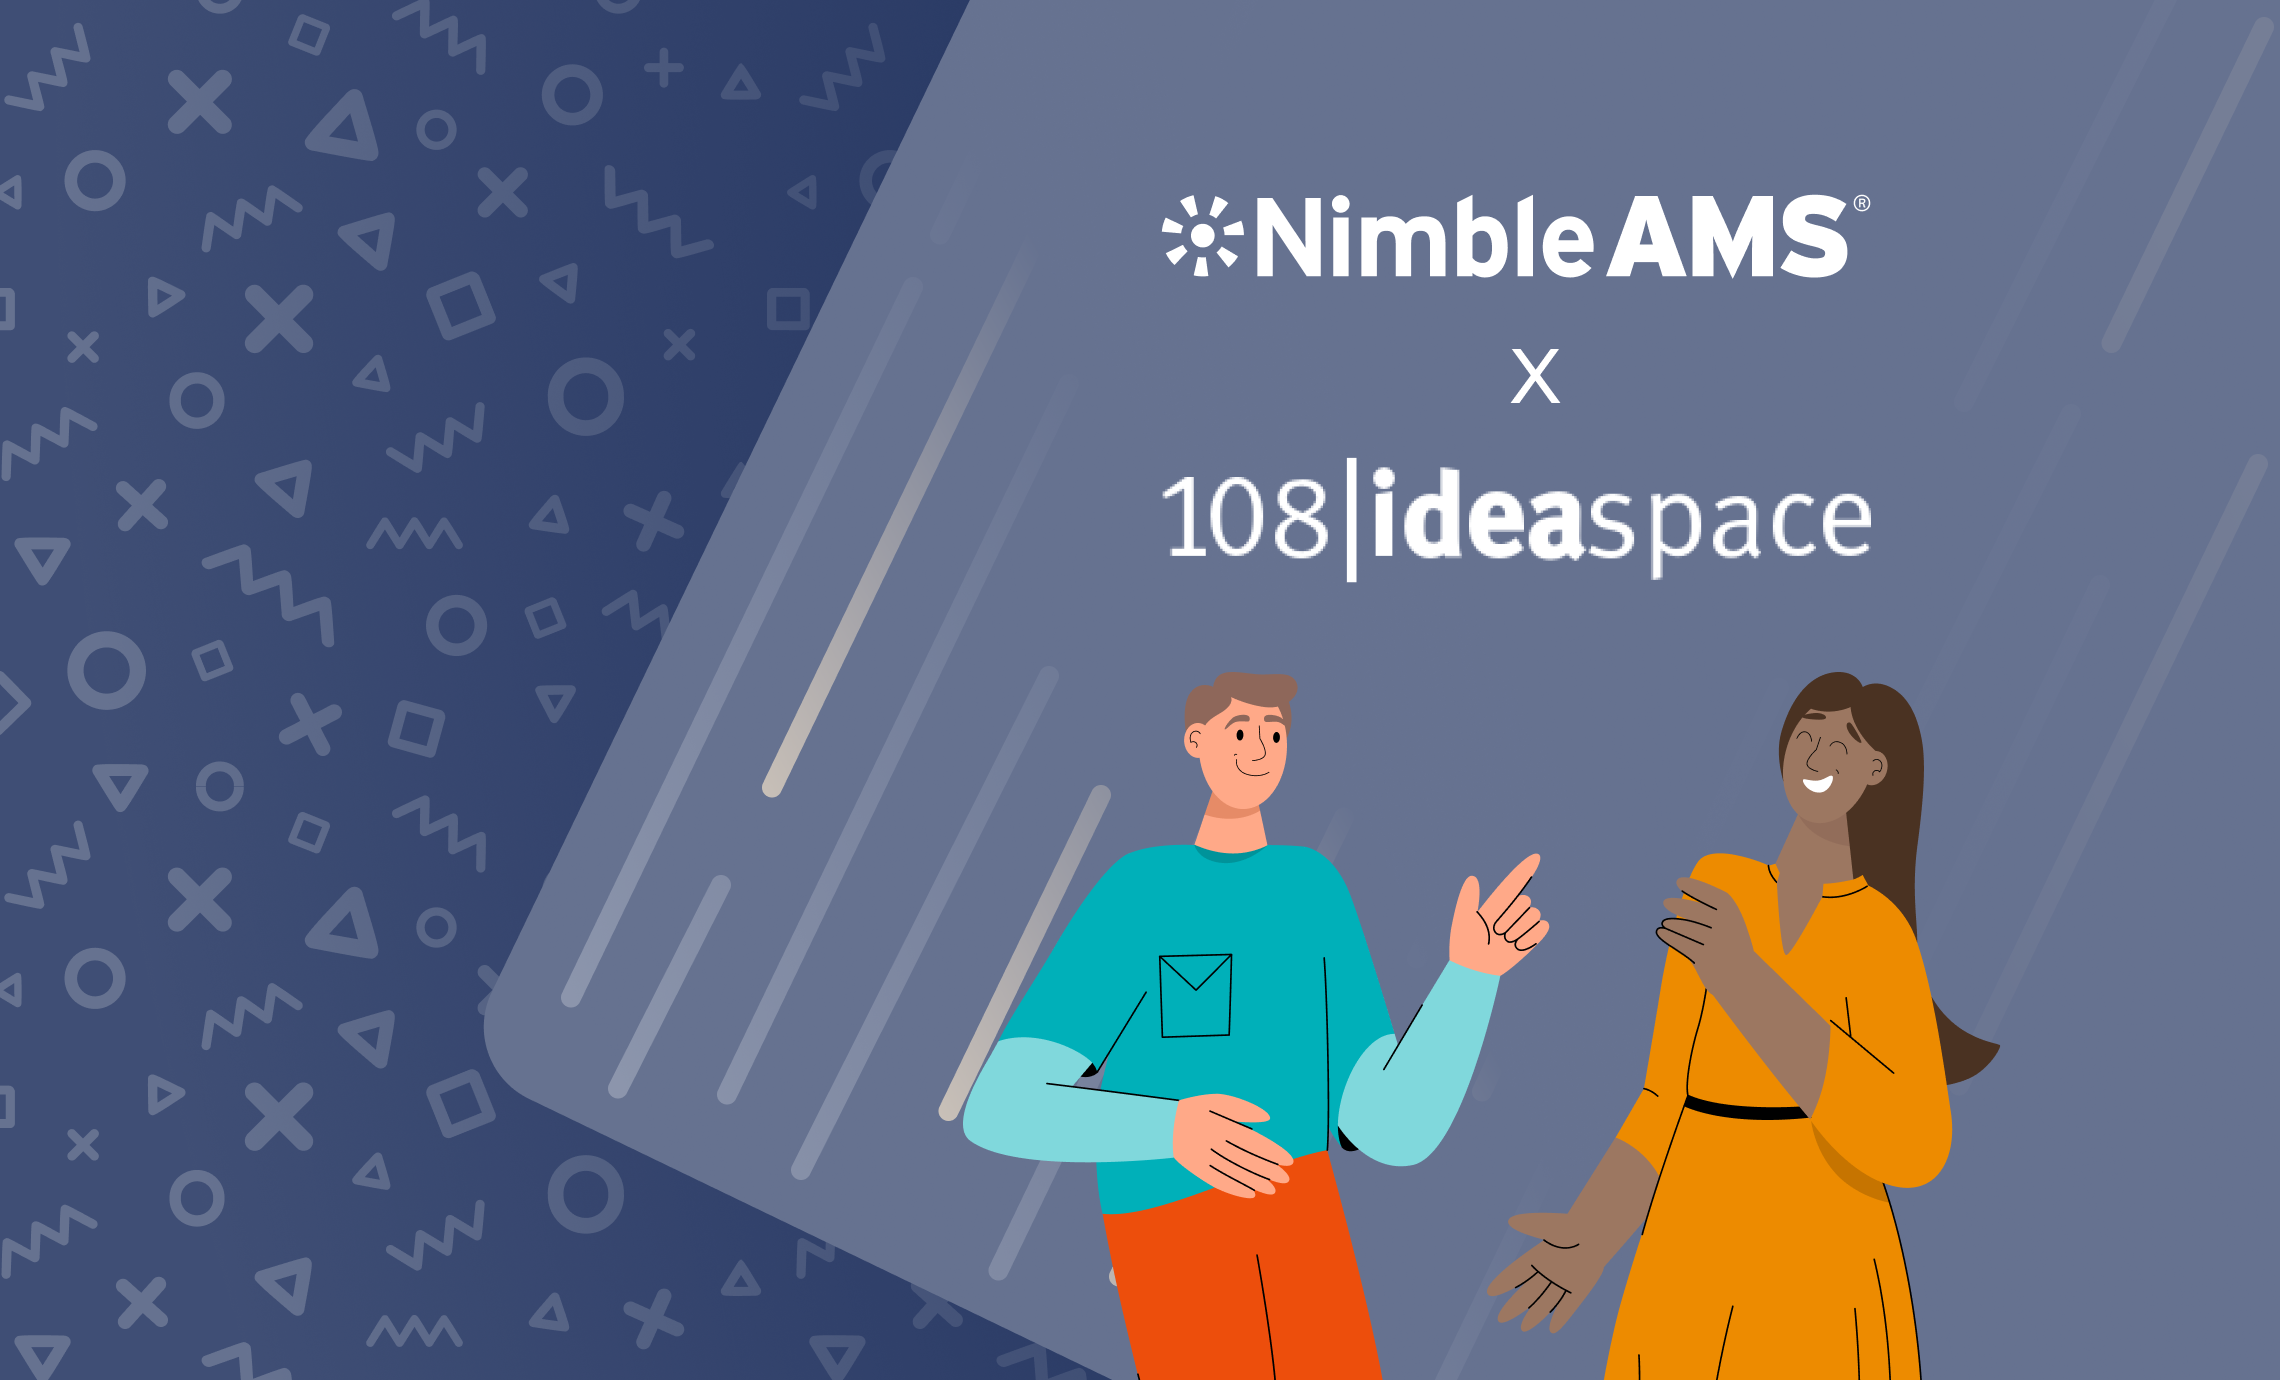 NAMS-BLG2209-108 ideaspace and Nimble AMS partnership-VA-v1.2 (1)